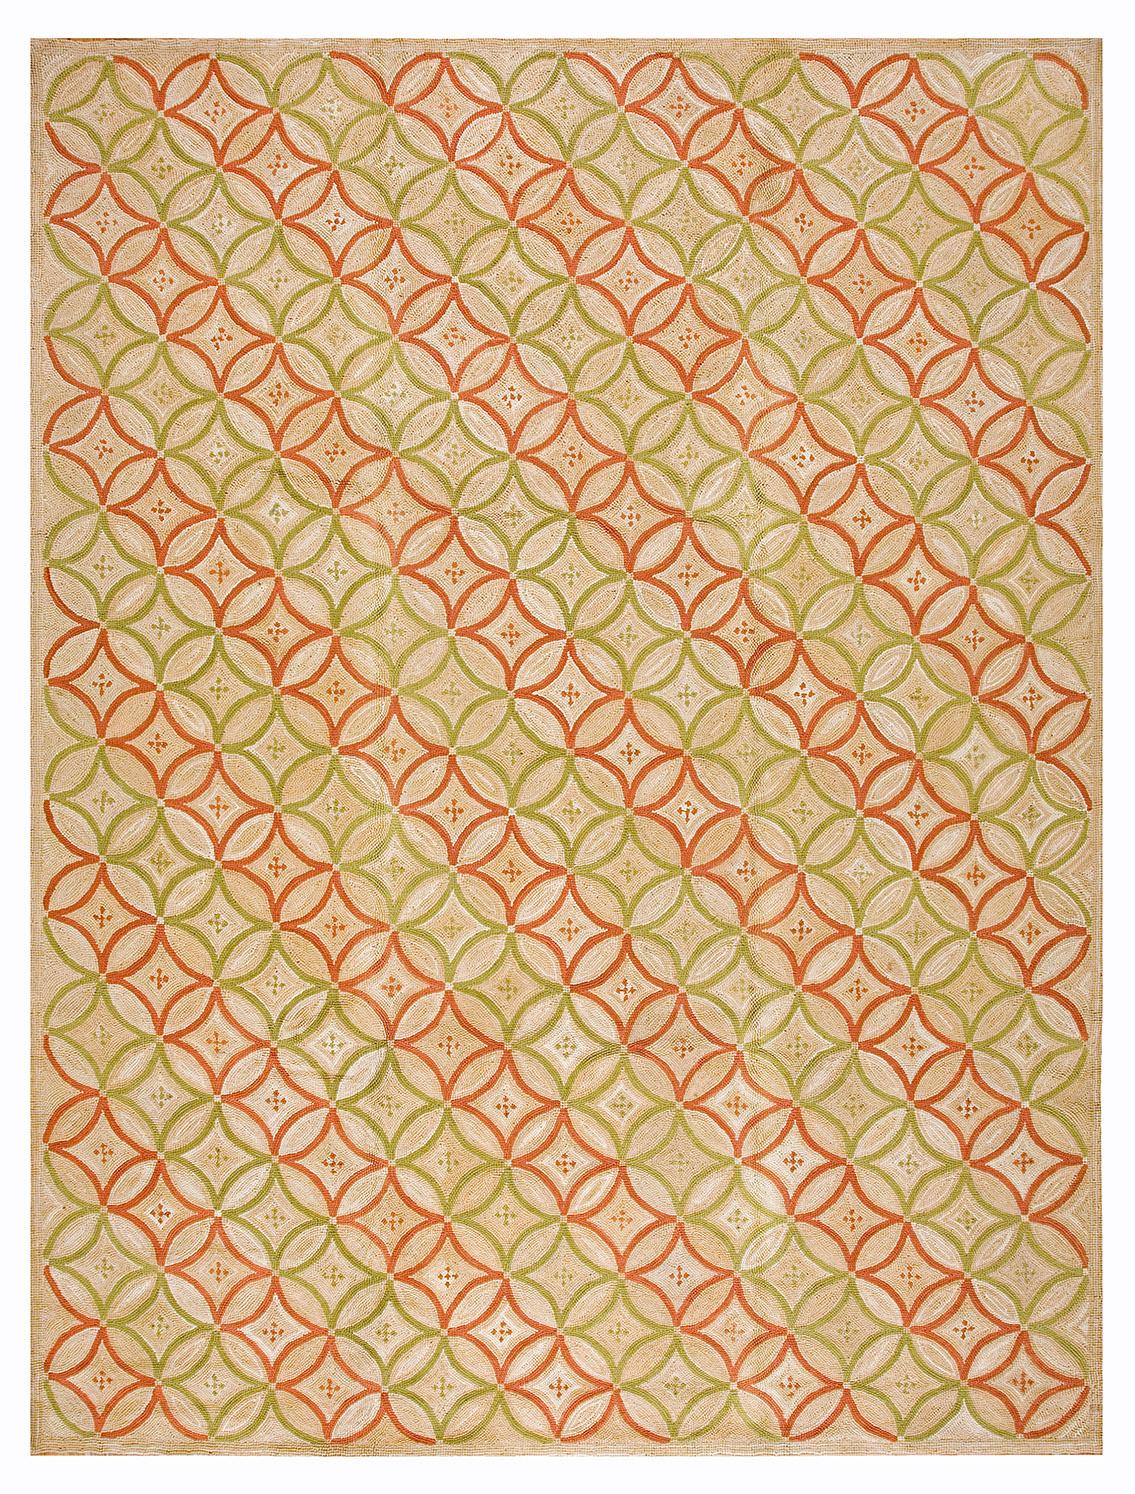 Contemporary Handmade Cotton Hooked Rug ( 6' x 9' - 183 x 274 cm )